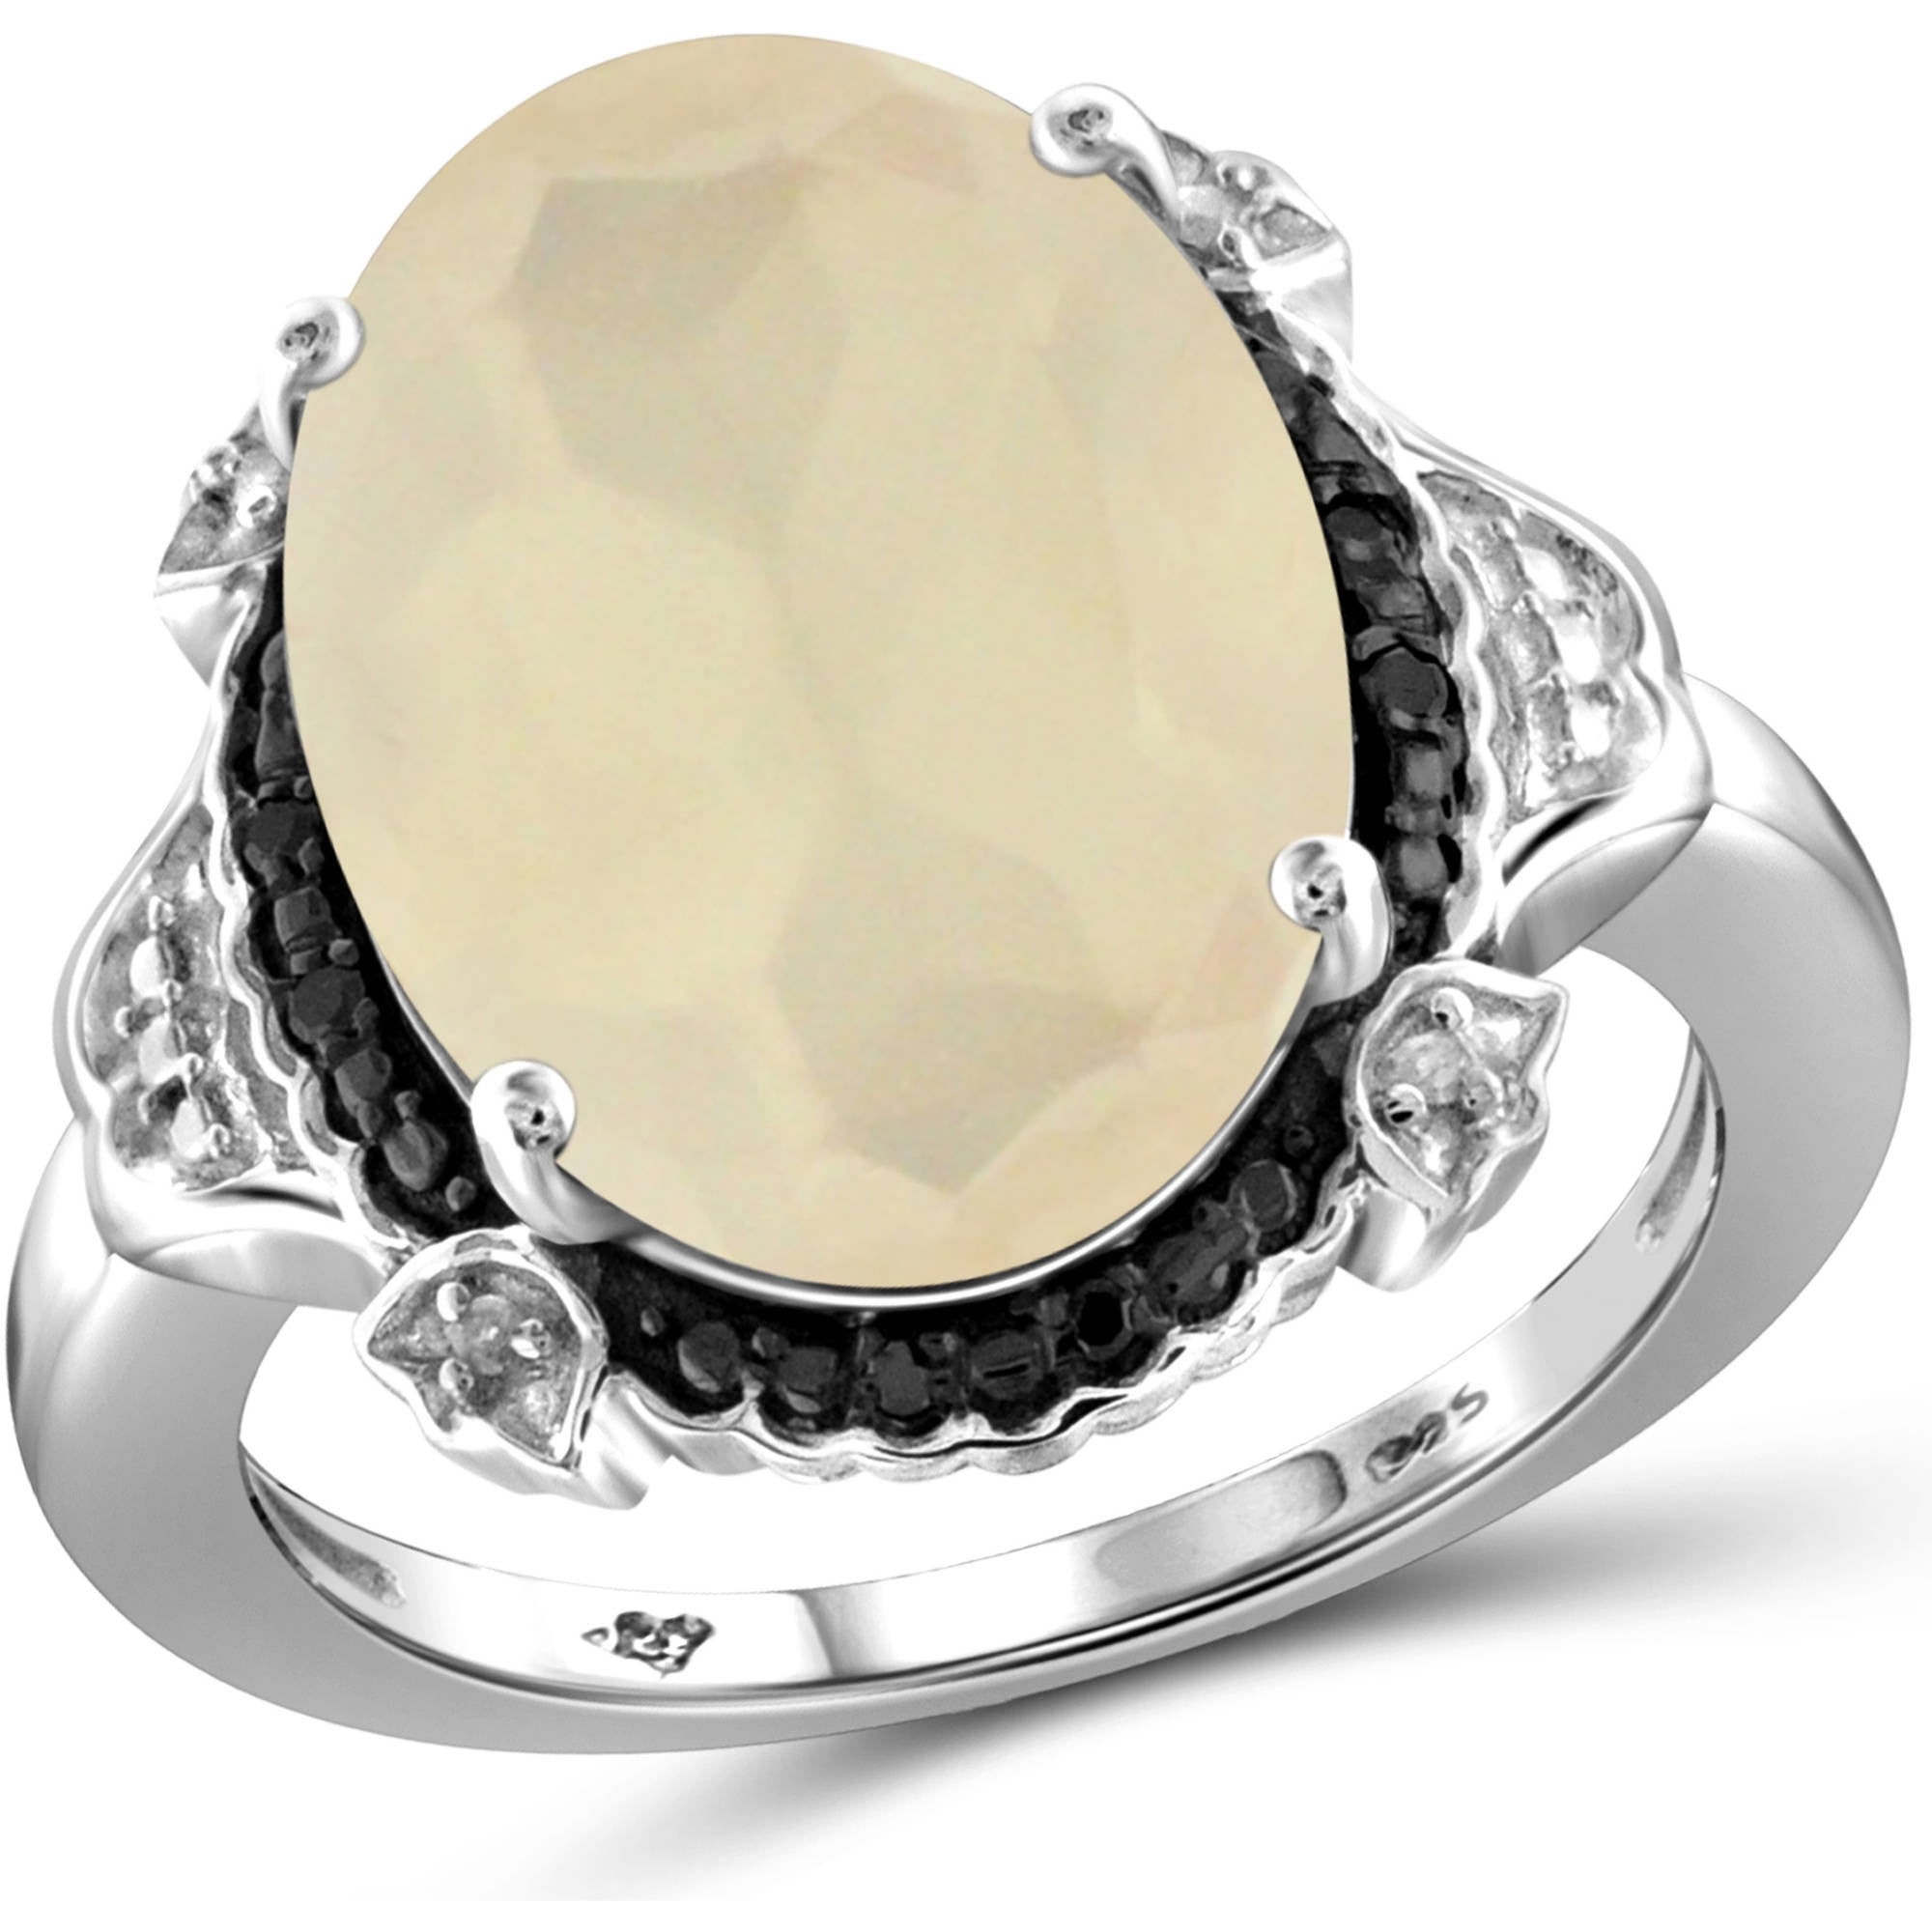 Moonstone Gemstone 925 Sterling Silver Black Friday Ring Jewelry SS-838 |  eBay